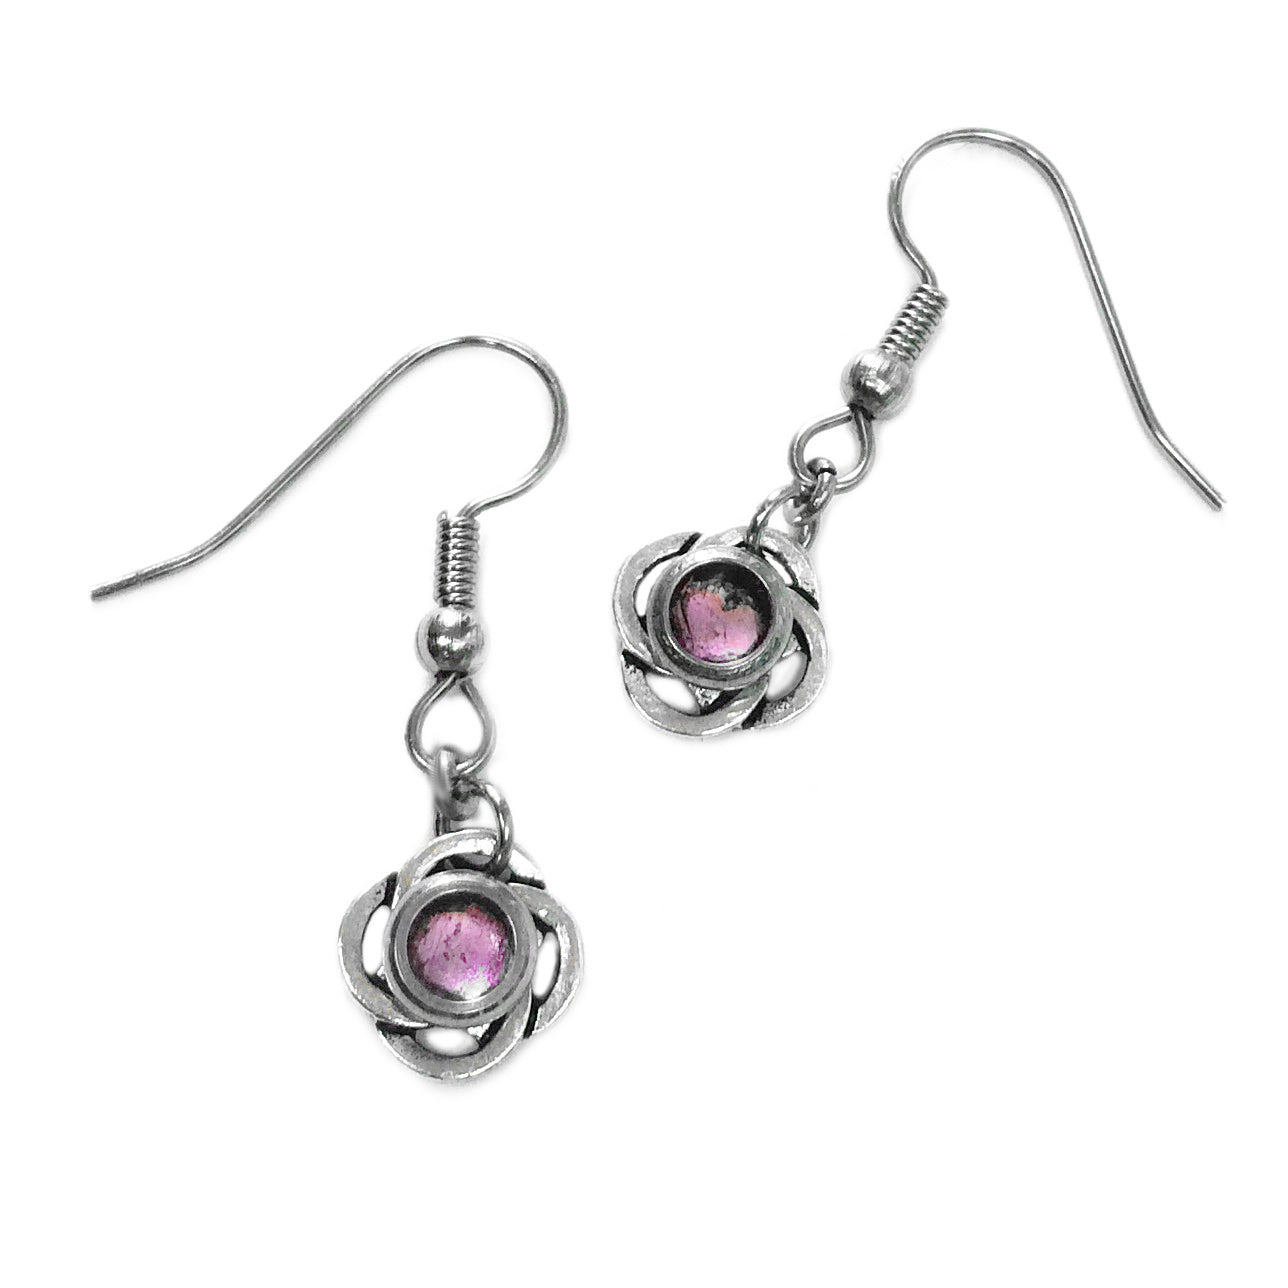 Silver Celtic Knot Dangle Earrings - Pink Resin - As Seen on Jane the Virgin